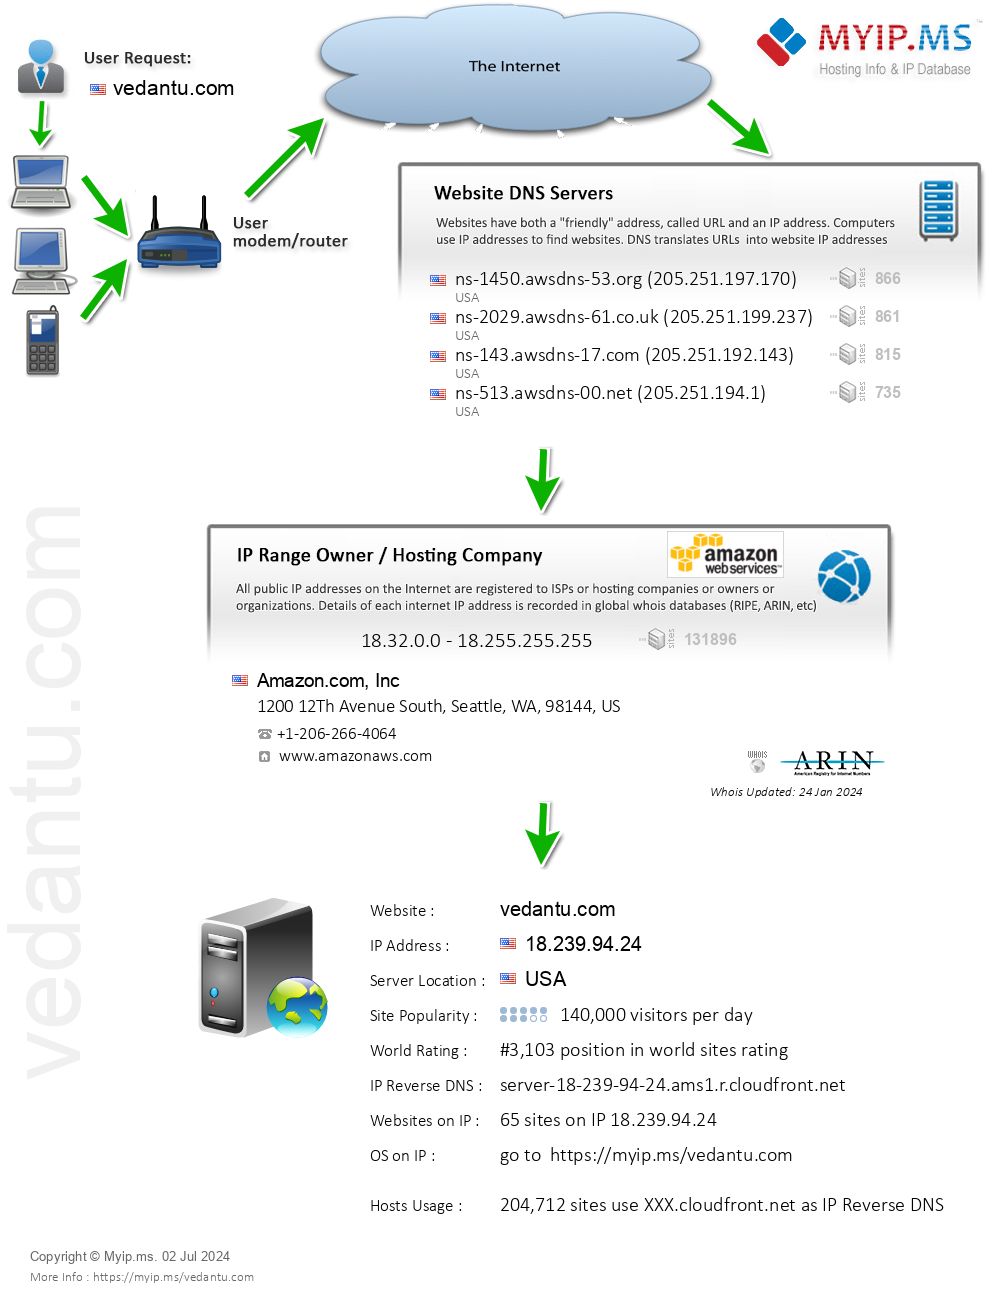 Vedantu.com - Website Hosting Visual IP Diagram